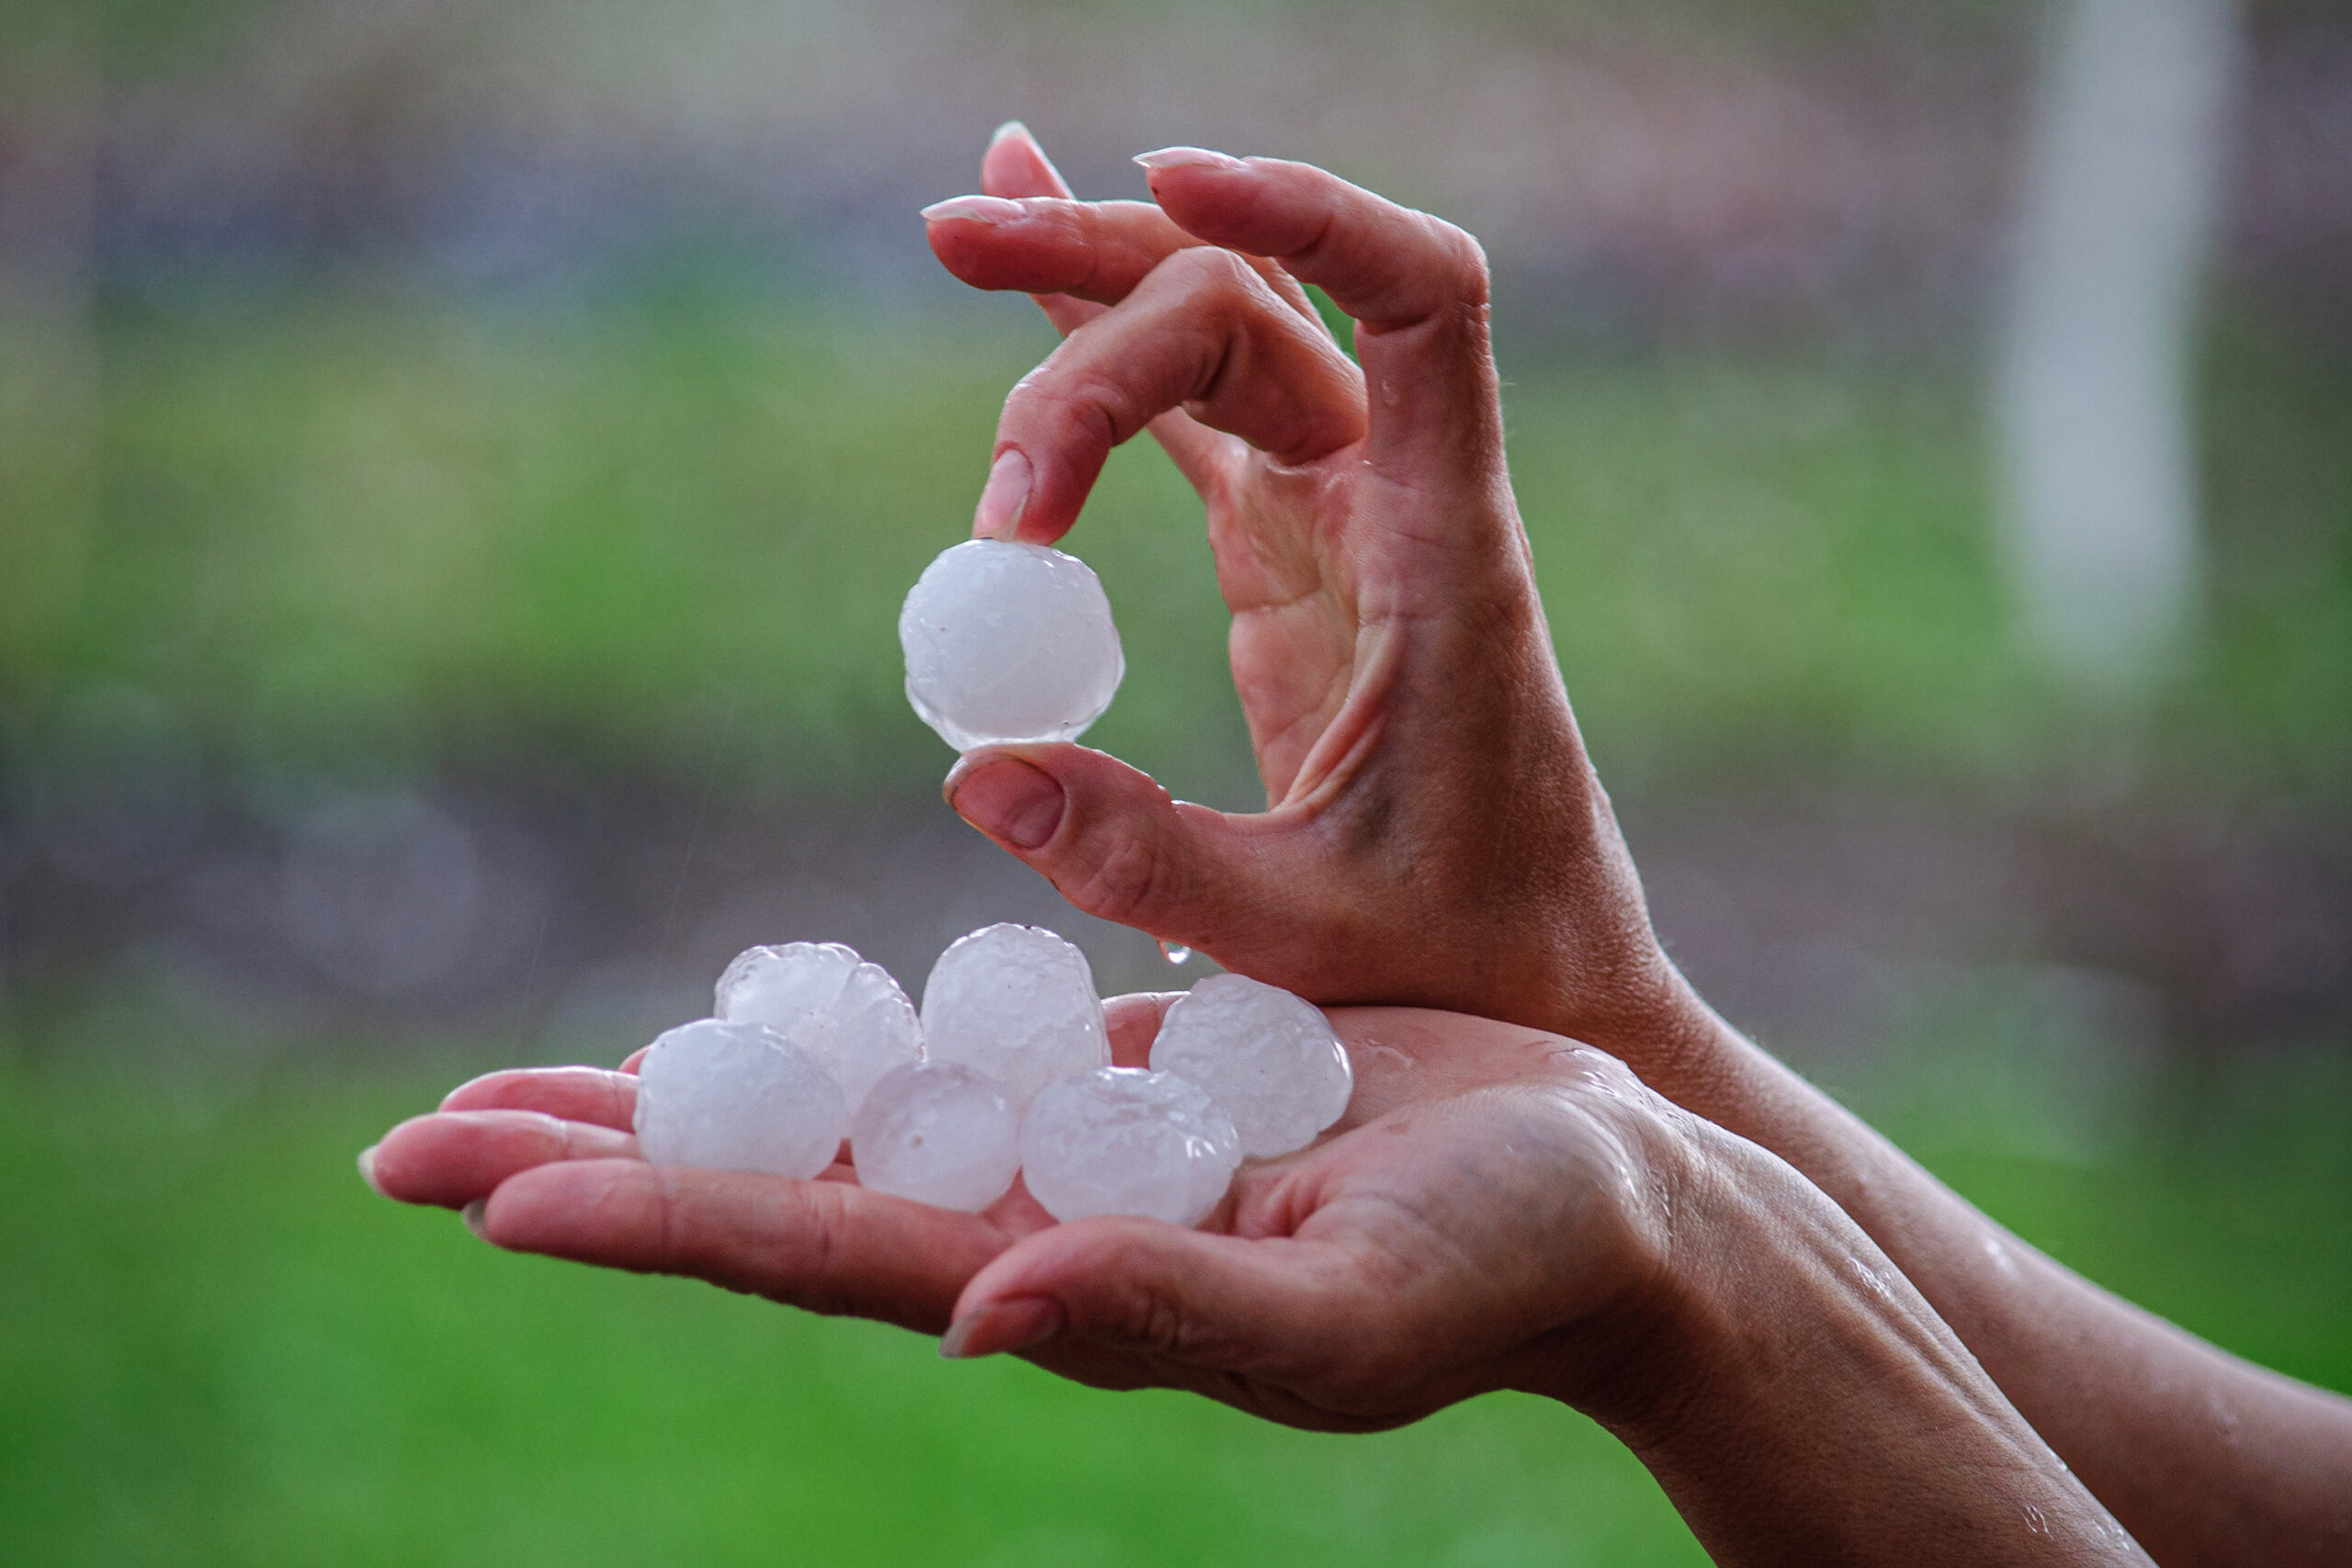 Woman’s hands holding large hailstones